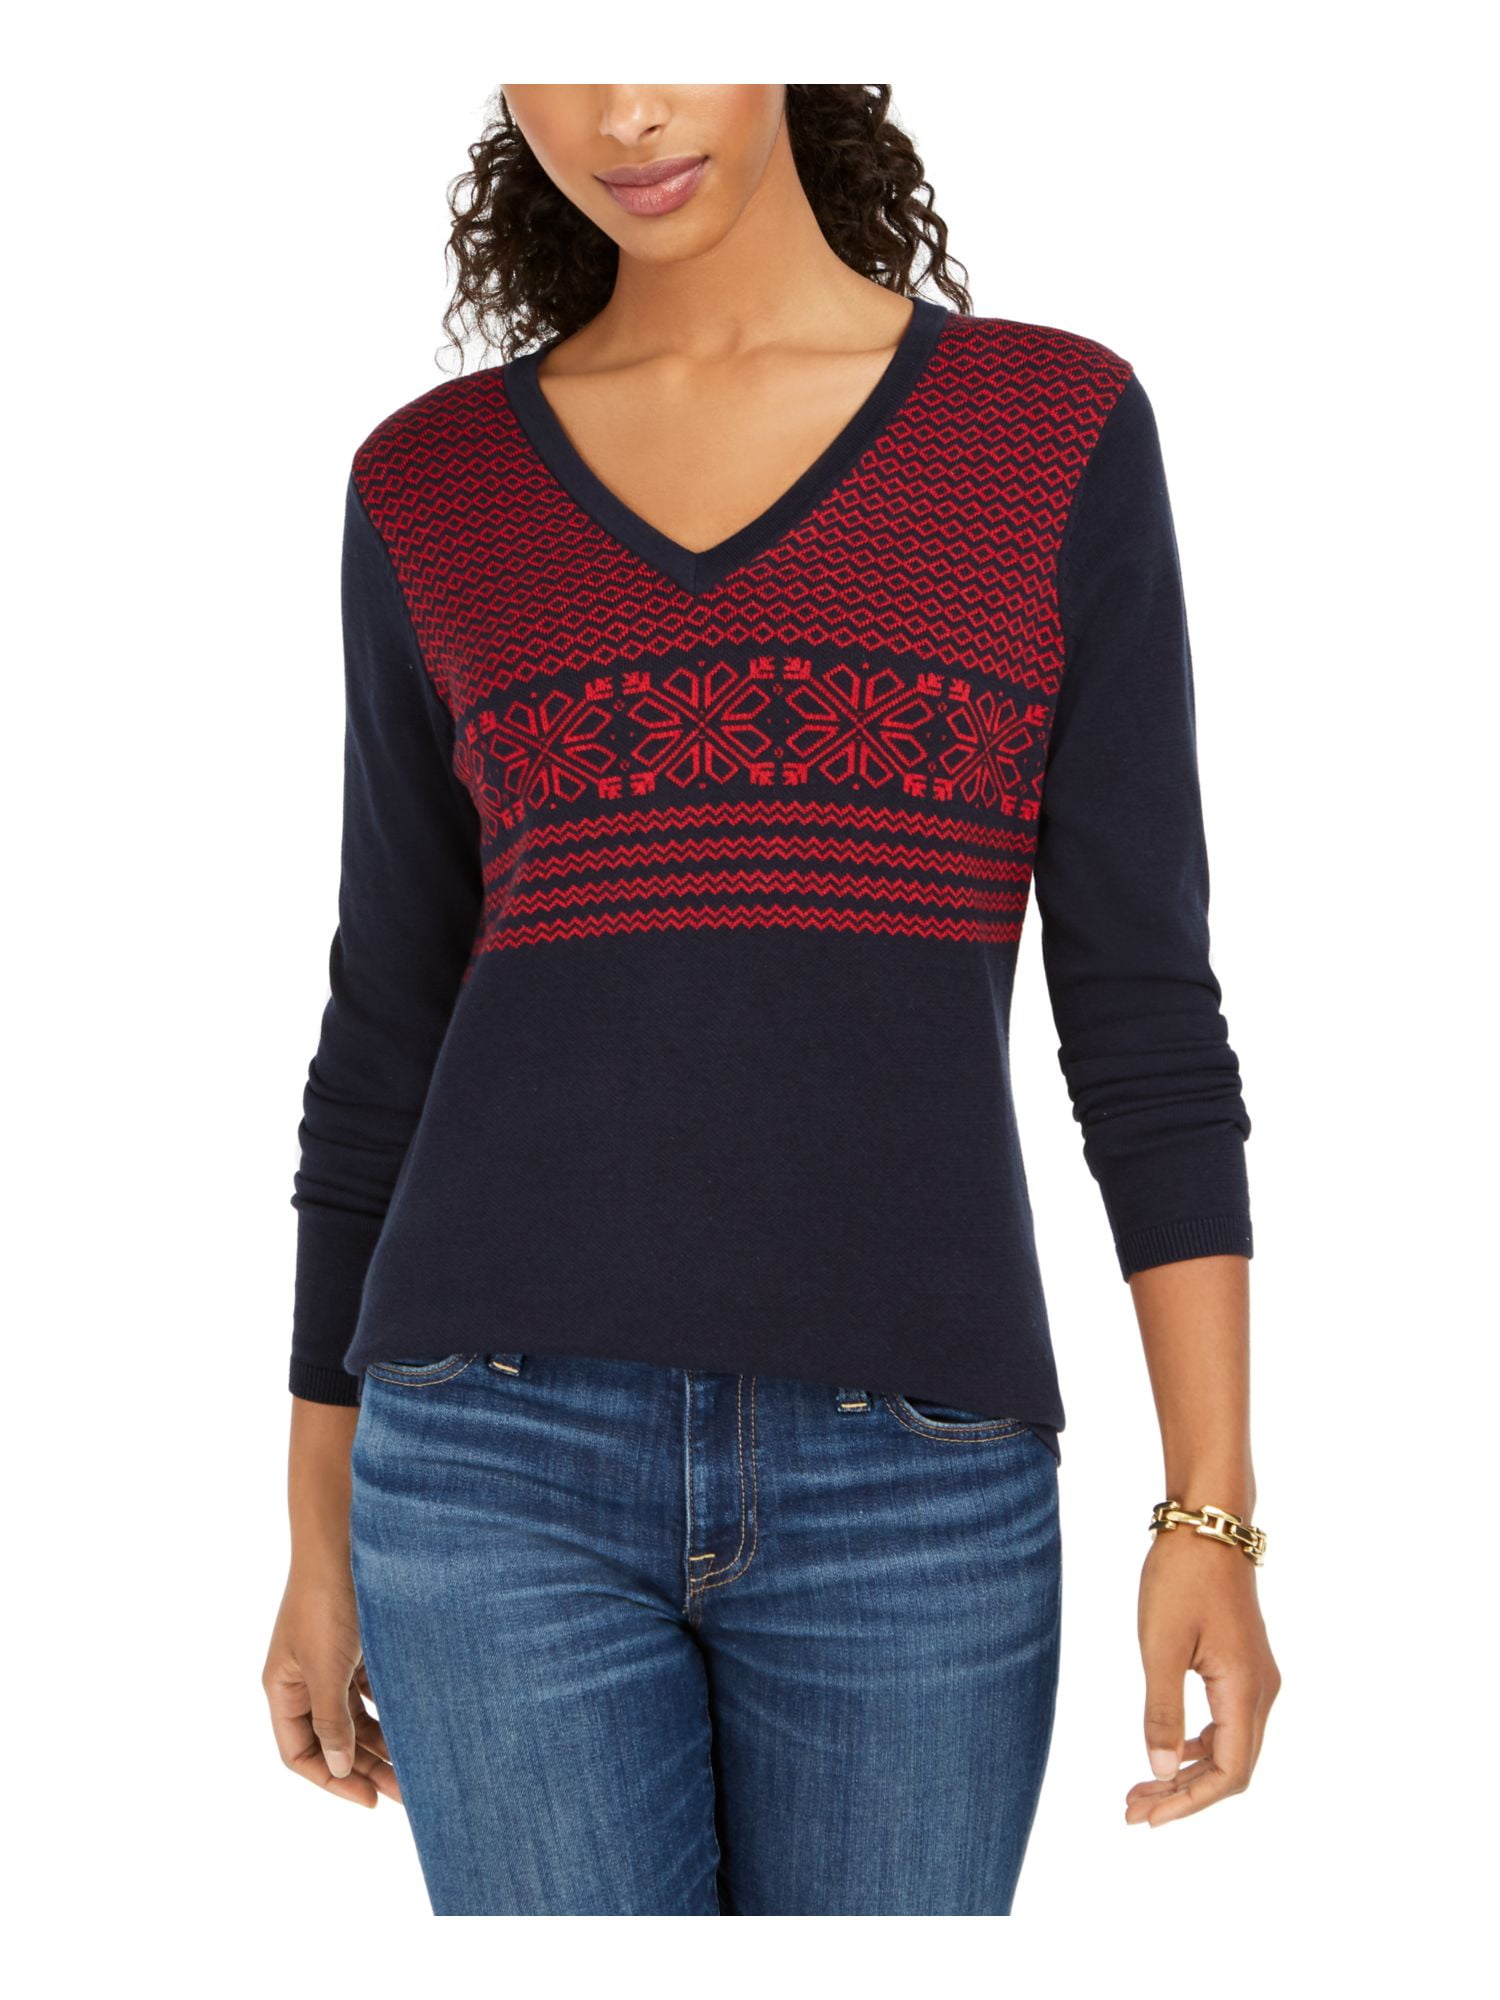 Ladies Tommy Hilfiger Block Stripe Sweater Vneck Jumper Knit 